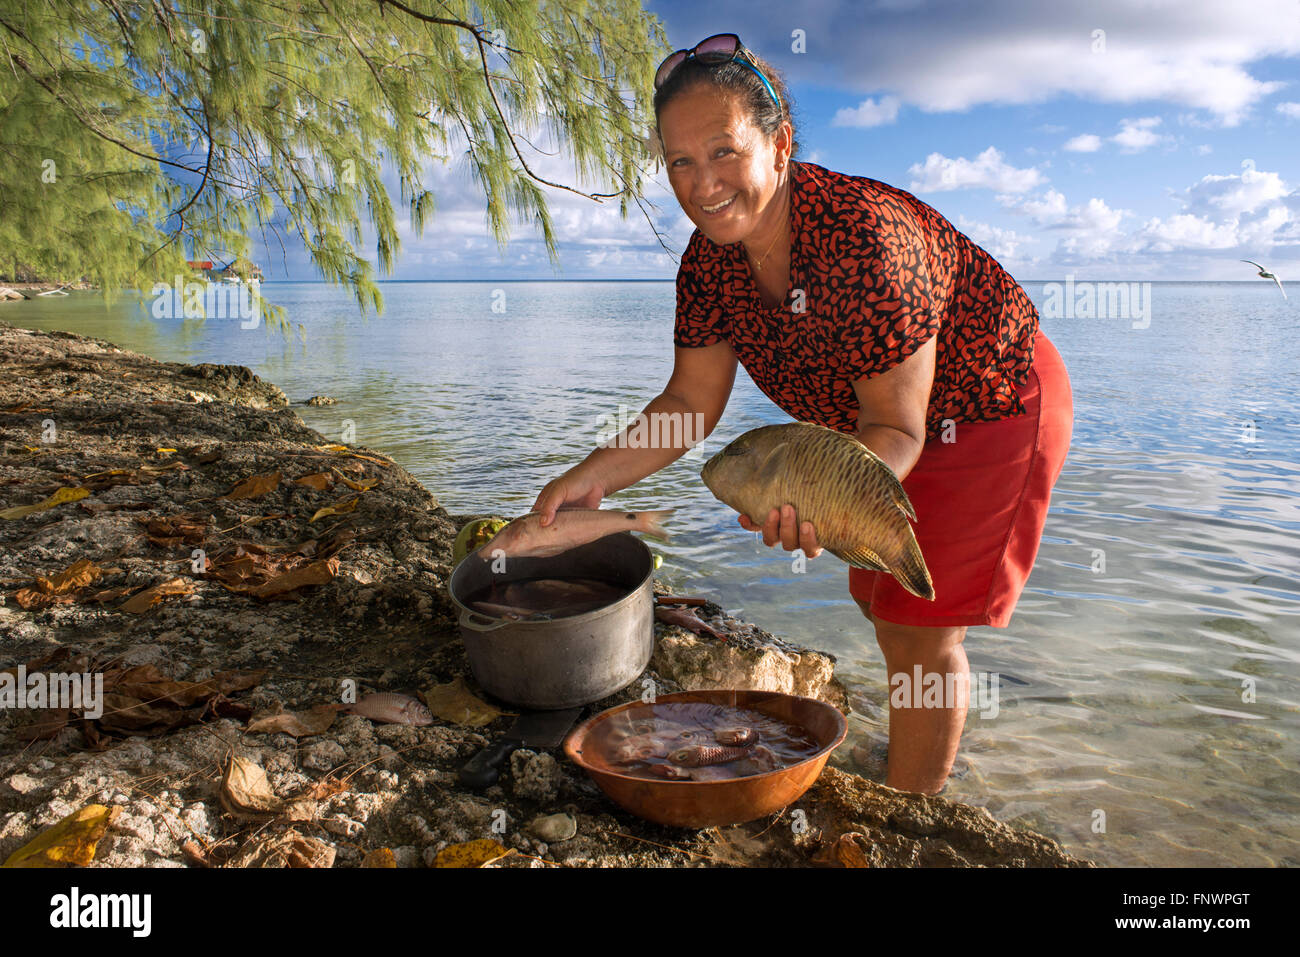 Fakarava, Arcipelago Tuamotus Polinesia francese Isole Tuamotu, South Pacific. Locale donna di fisher. Foto Stock